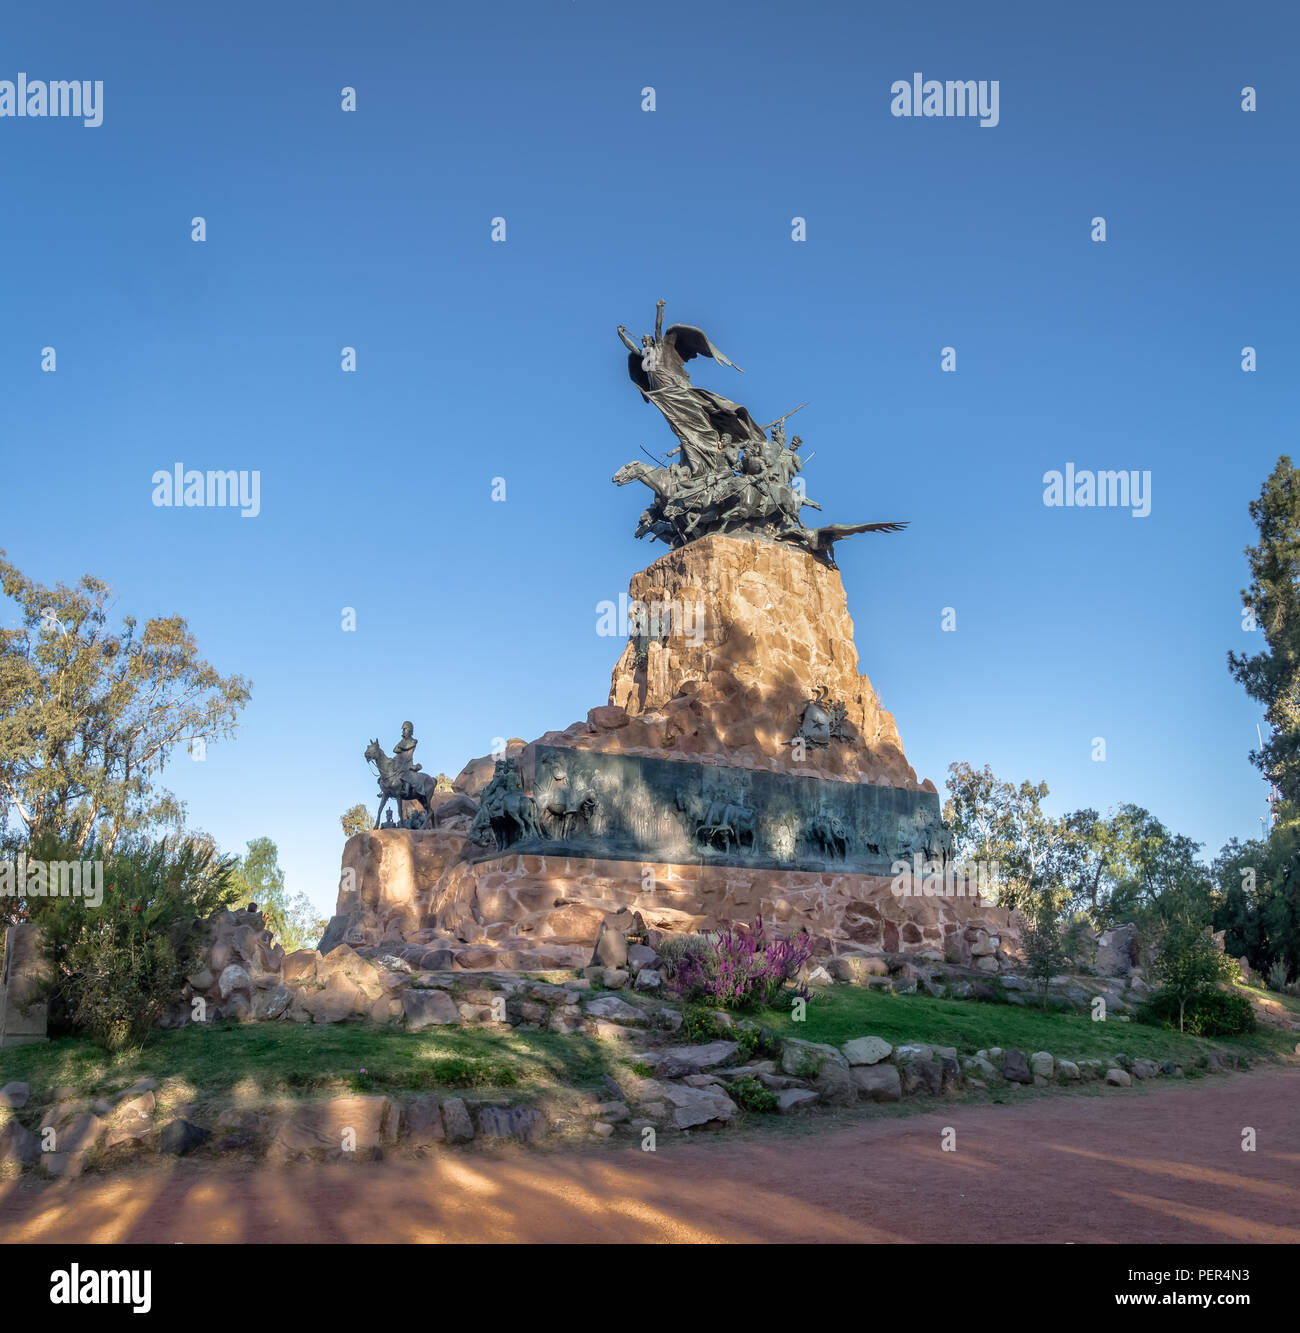 Army of the Andes Monument (Monumento al Ejercito de Los Andes) in Cerro de la Gloria at General San Martin Park - Mendoza, Argentina Stock Photo